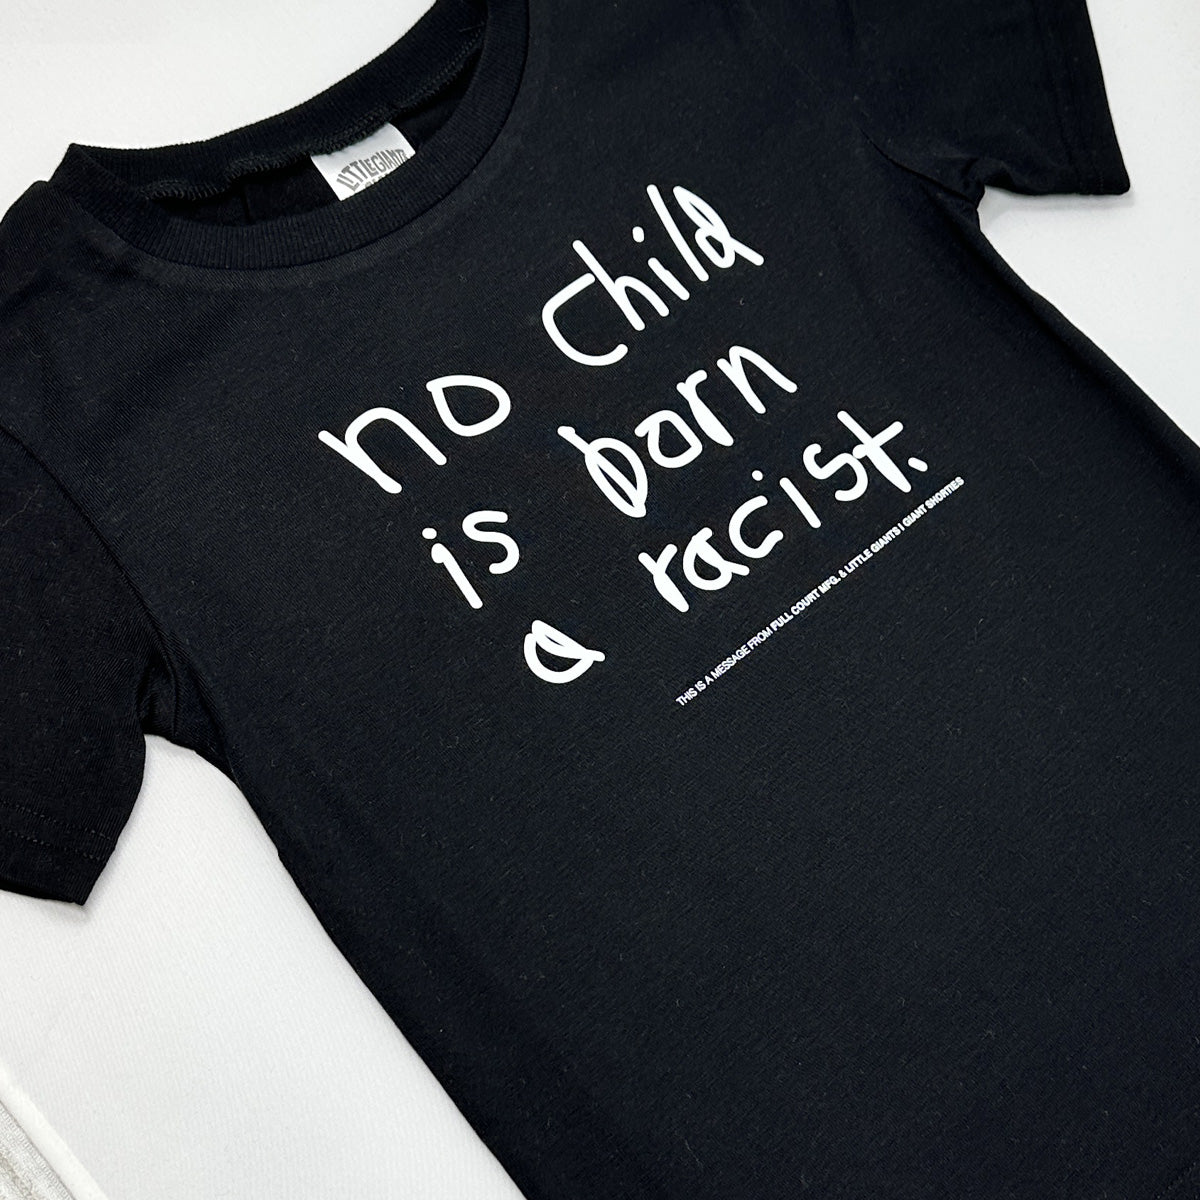 No Child is Born a Racist T-Shirt (Black)